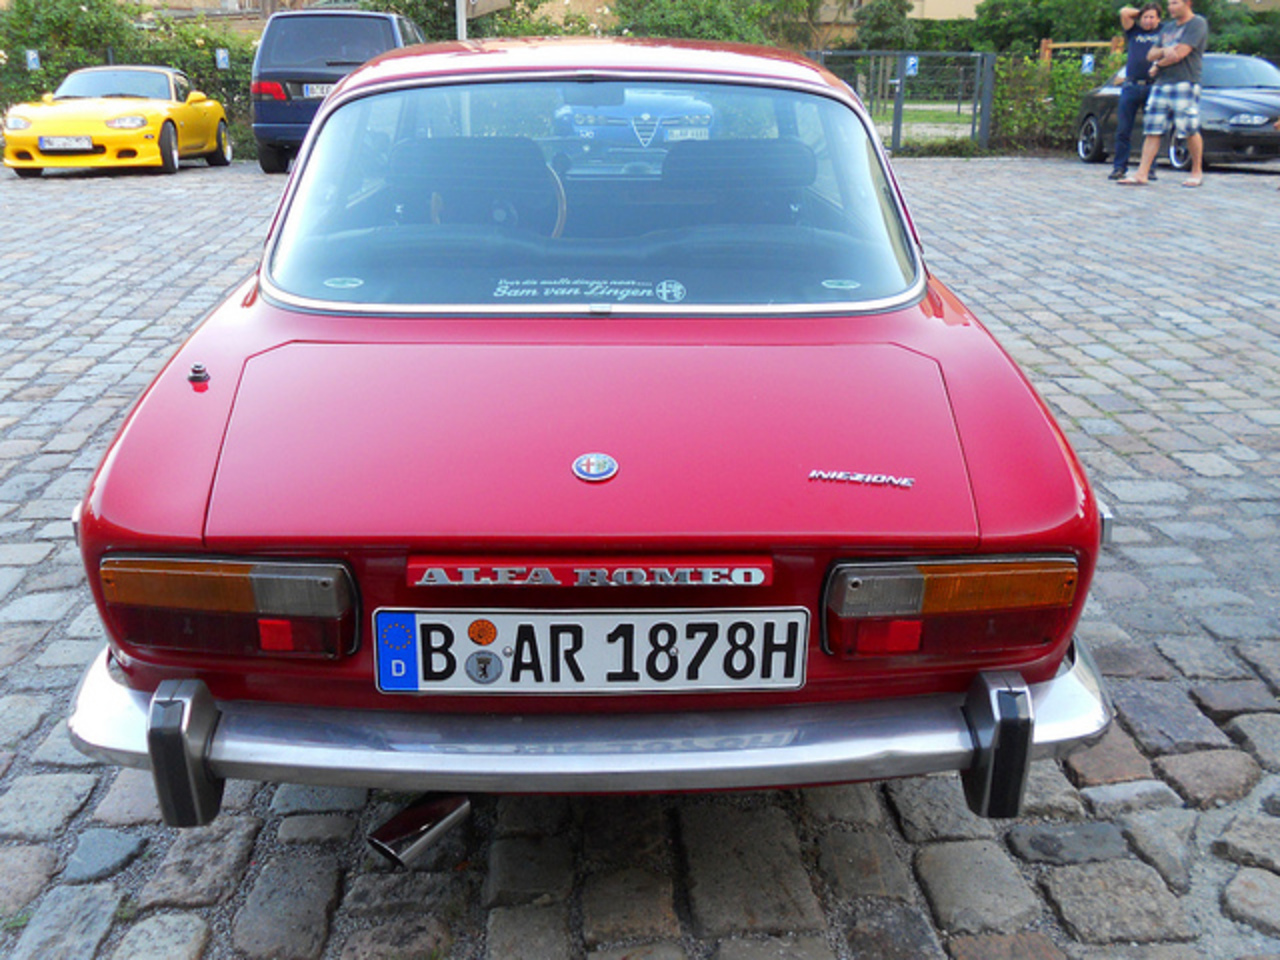 Alfa Romeo GTV 2000 Iniezione (1975) | Flickr - Photo Sharing!